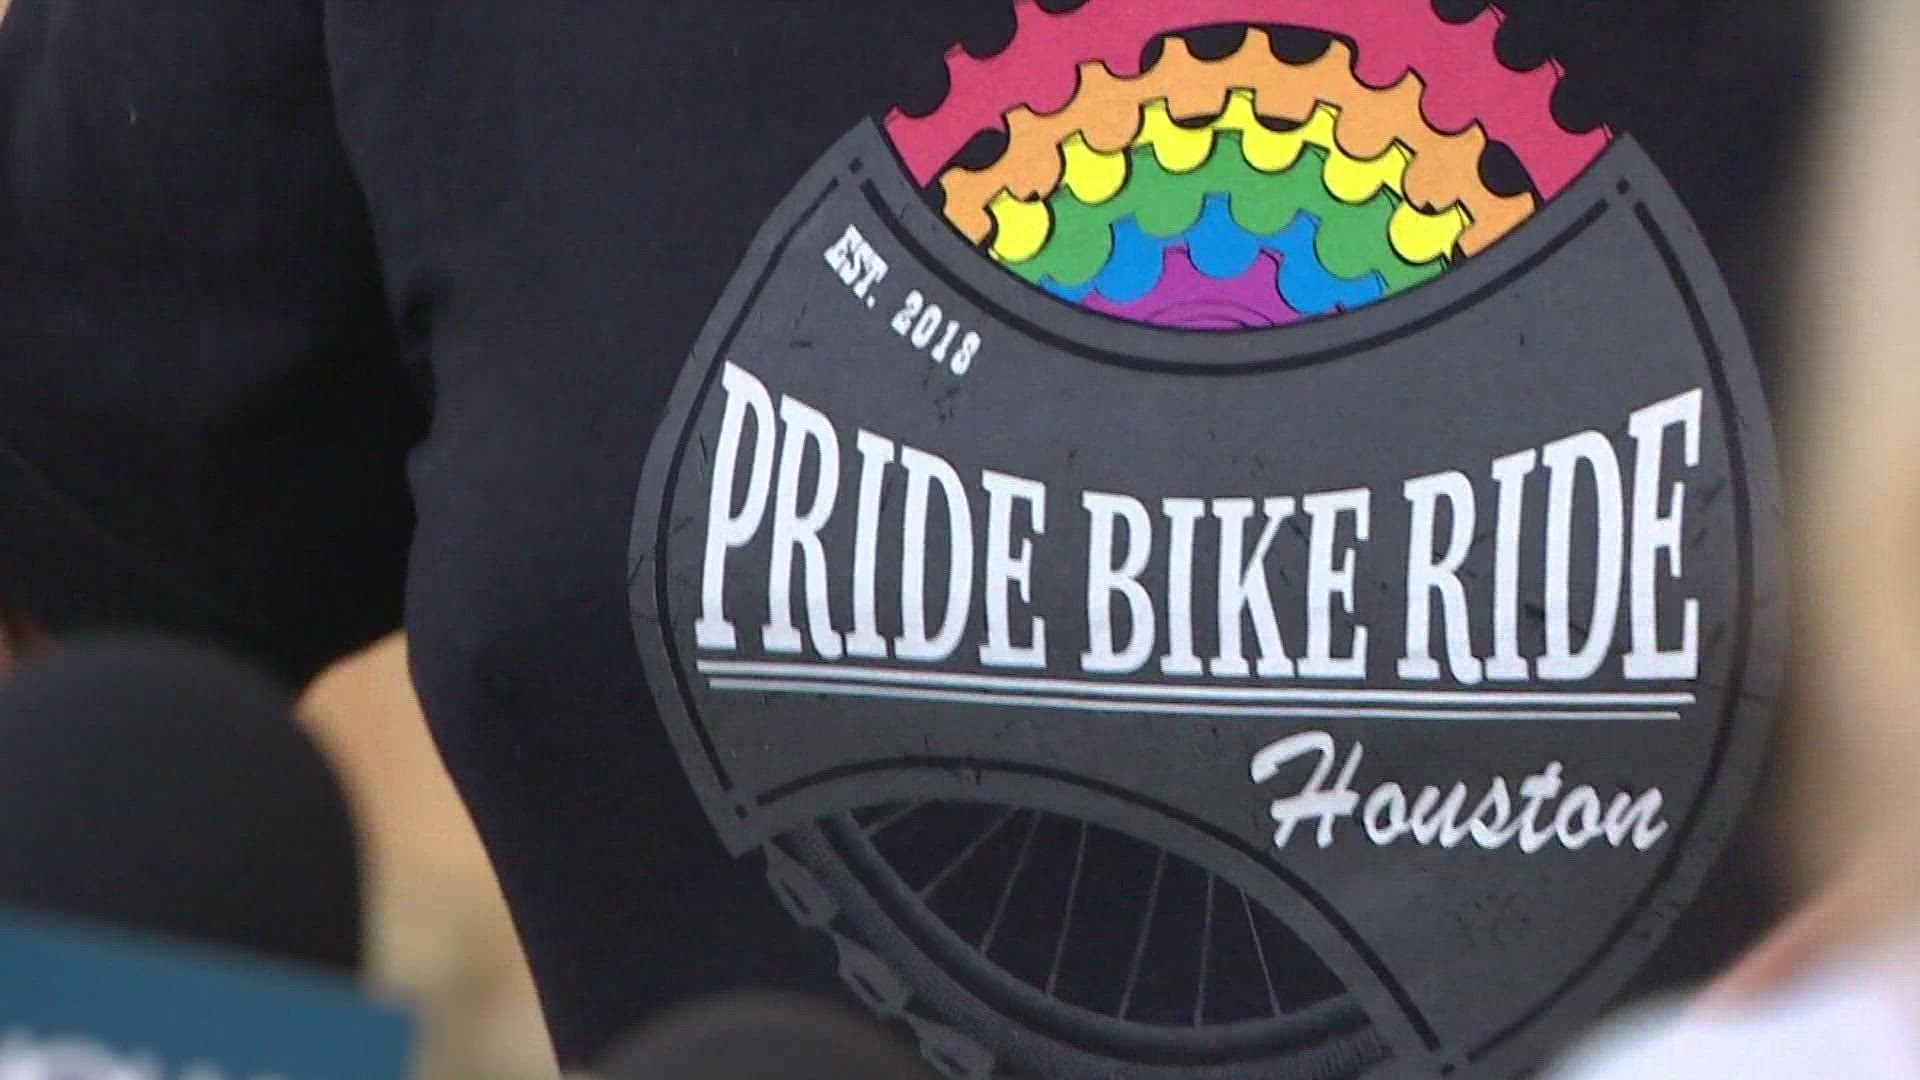 "He was a friend, he was a strong ally, a father, a friend a cyclist," Pride Bike Ride Houston's founder David Loredo said.